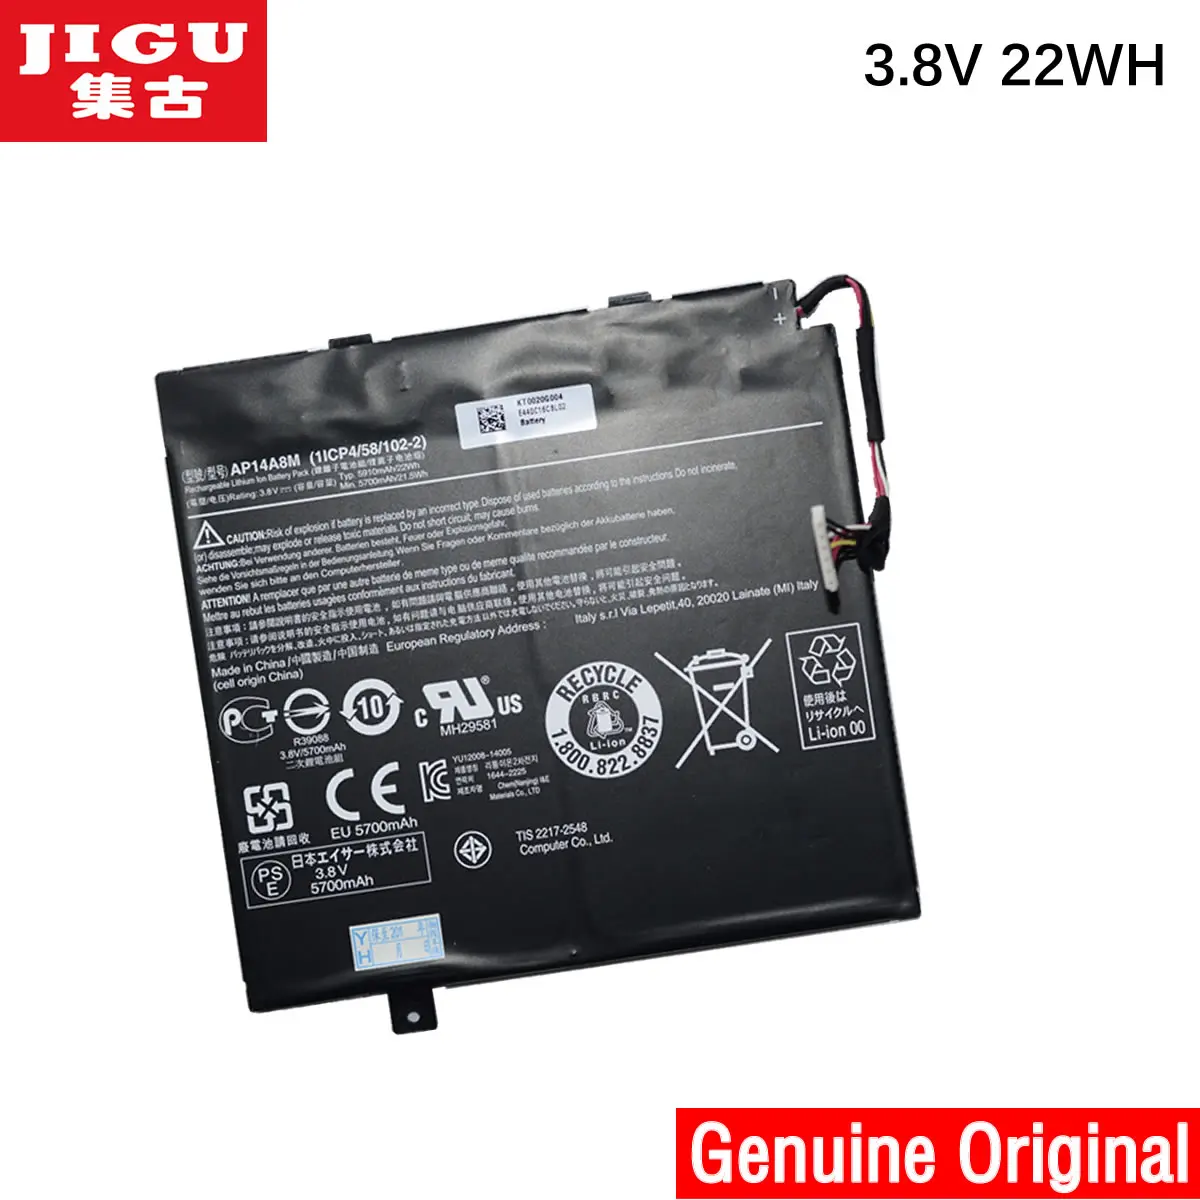 

JIGU Original Laptop Battery 3.8V 1ICP4/58/102-2 AP14A8M For ACER A3-A20 A3-A30 For Aspire Switch 11 Switch 11V Switch 10E